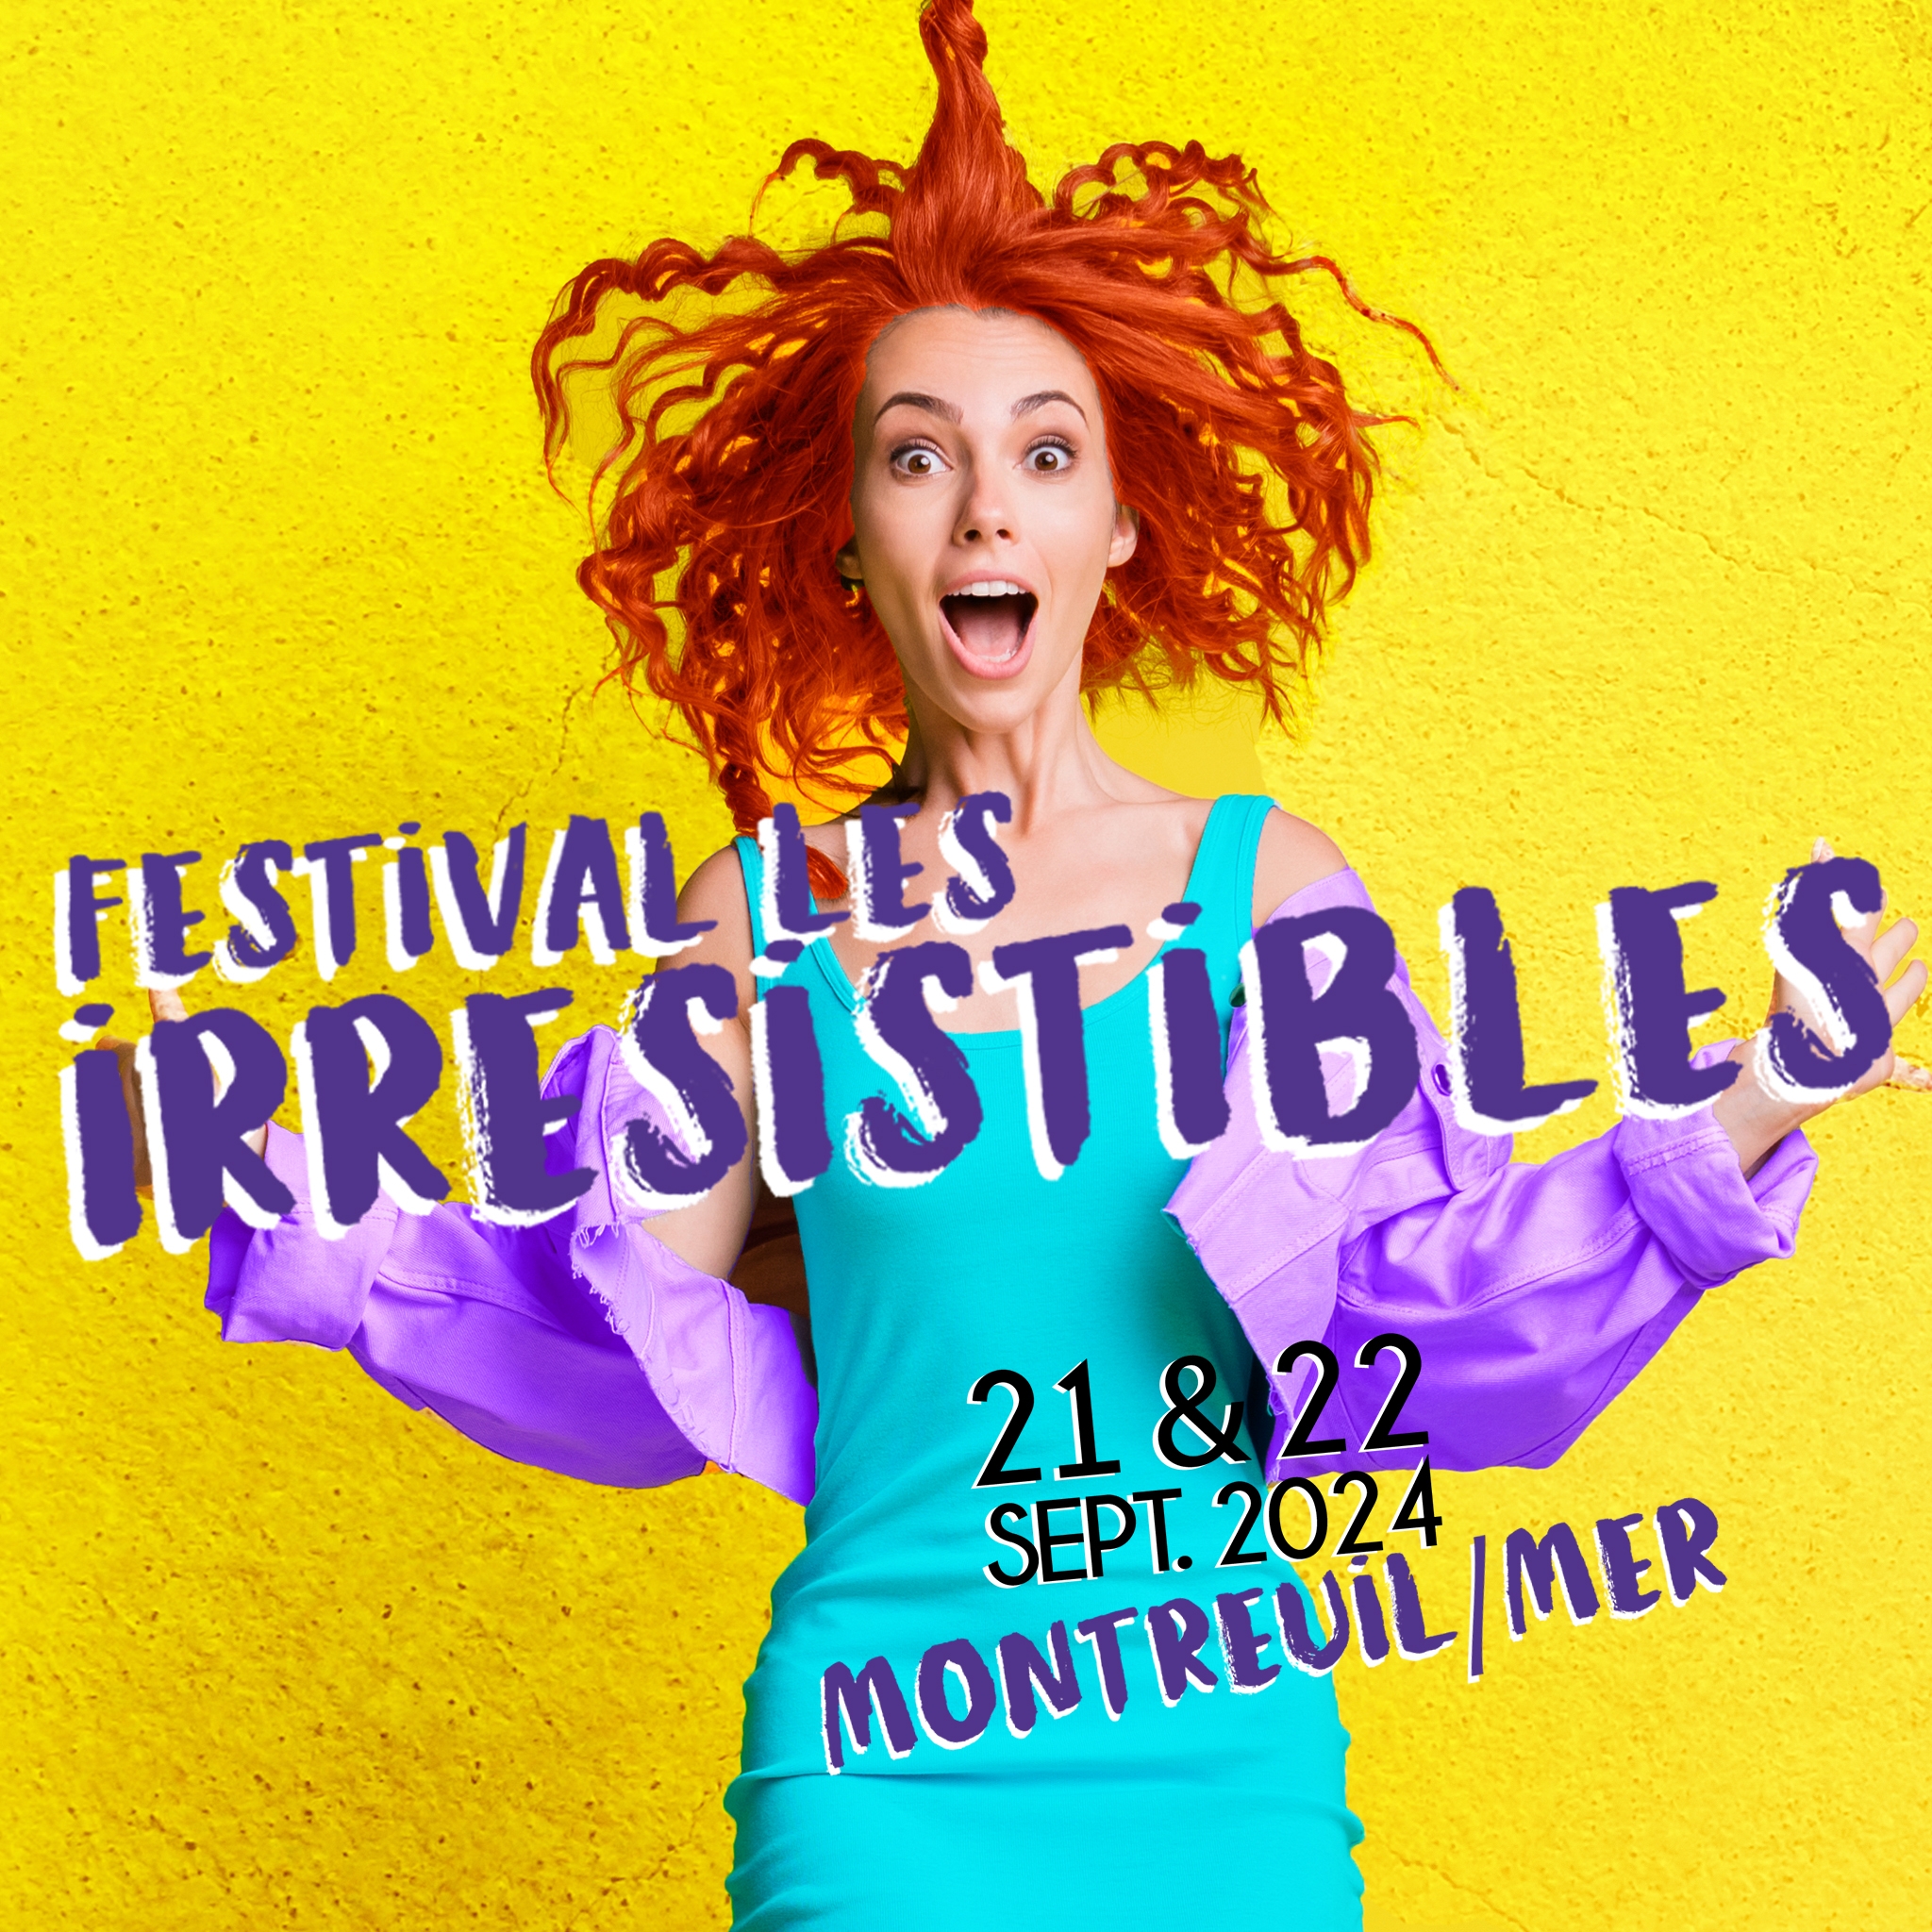 Festival "Les irrésistibles"